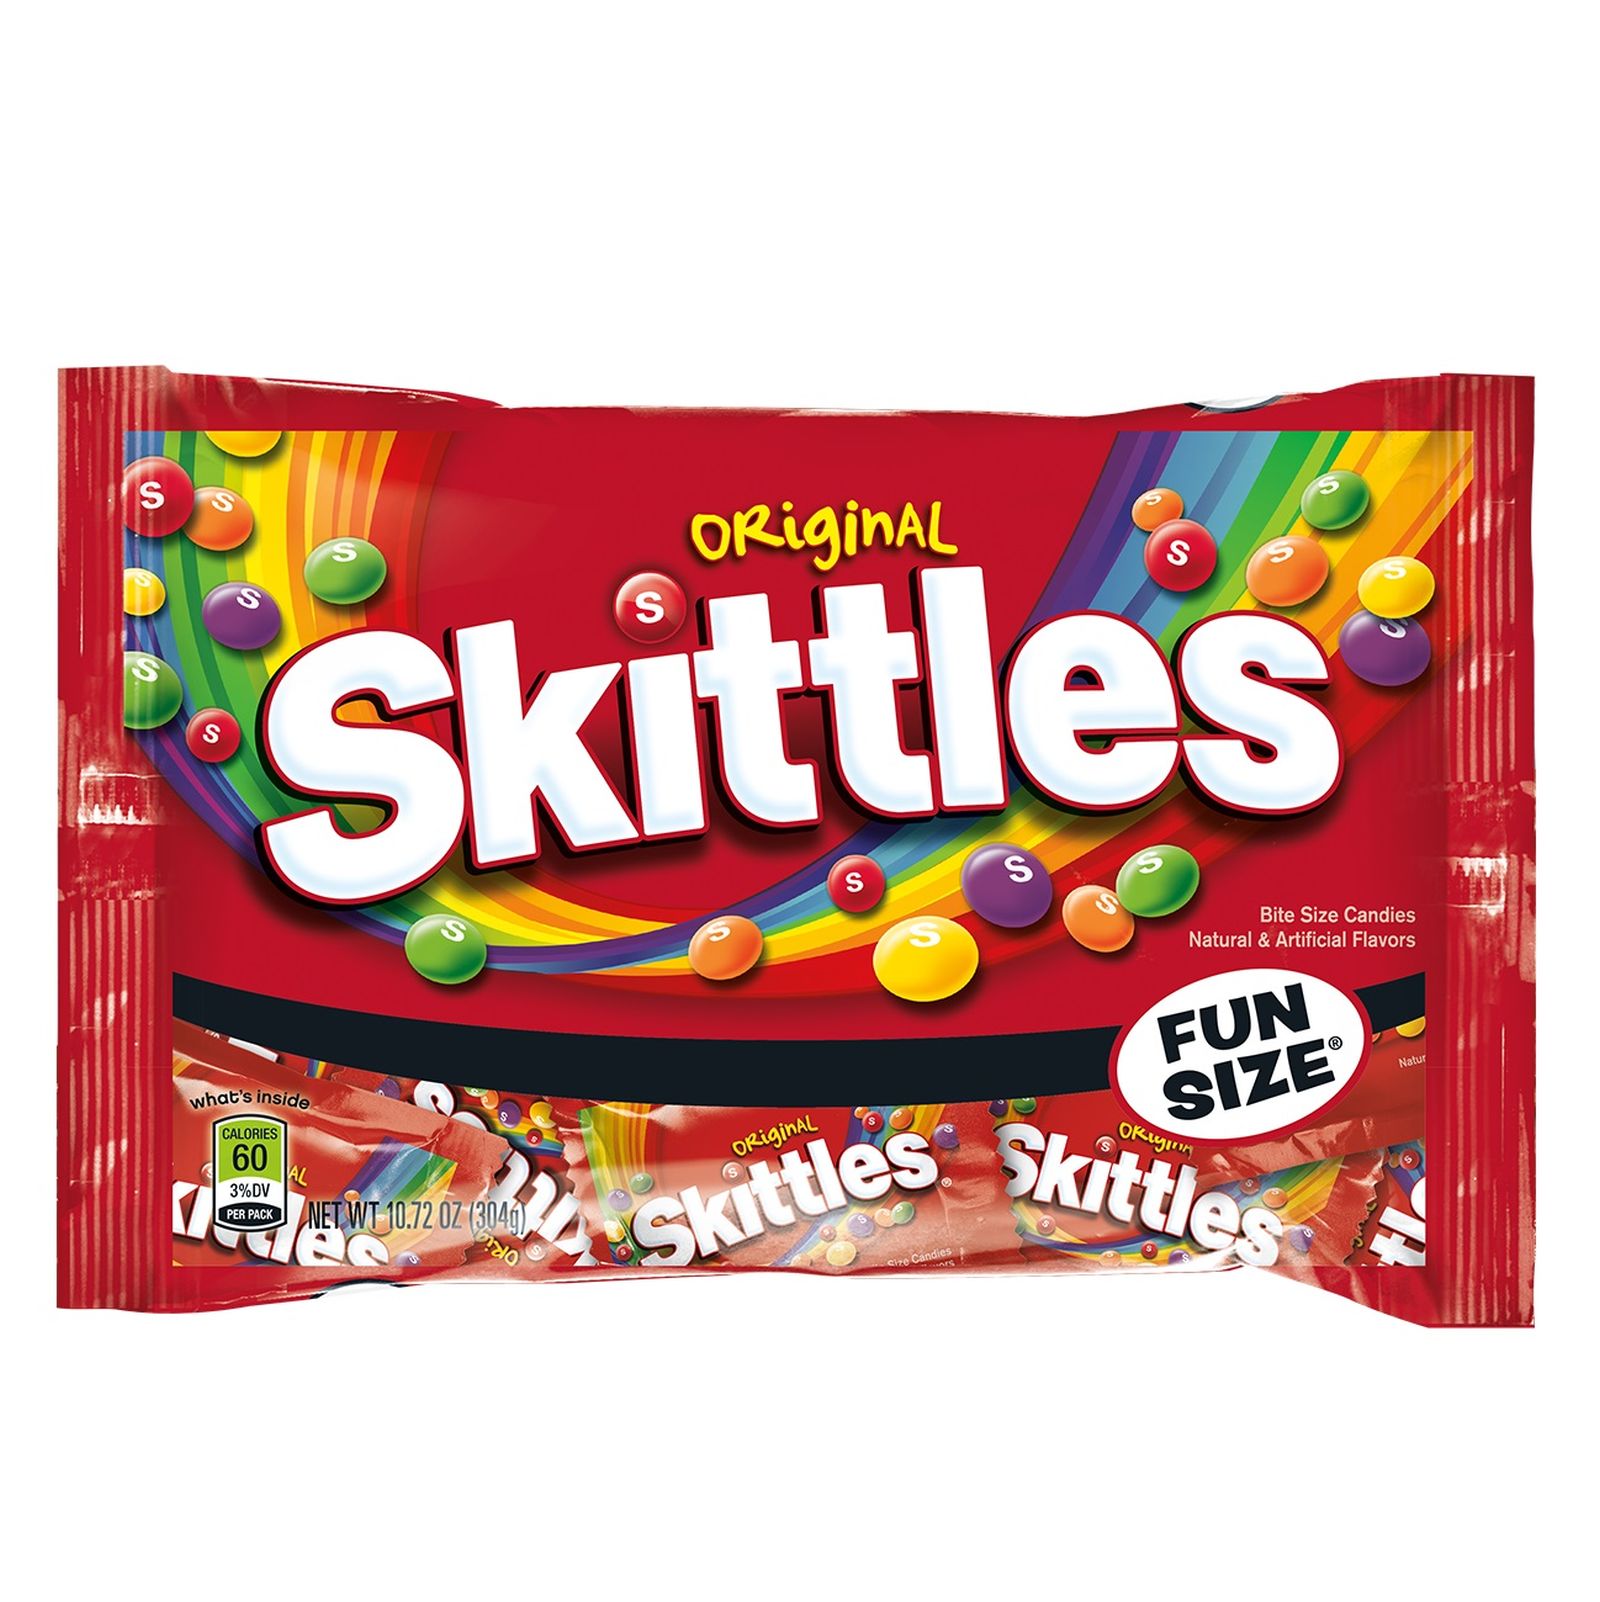 Skittles Original Fun Size 10.72 oz